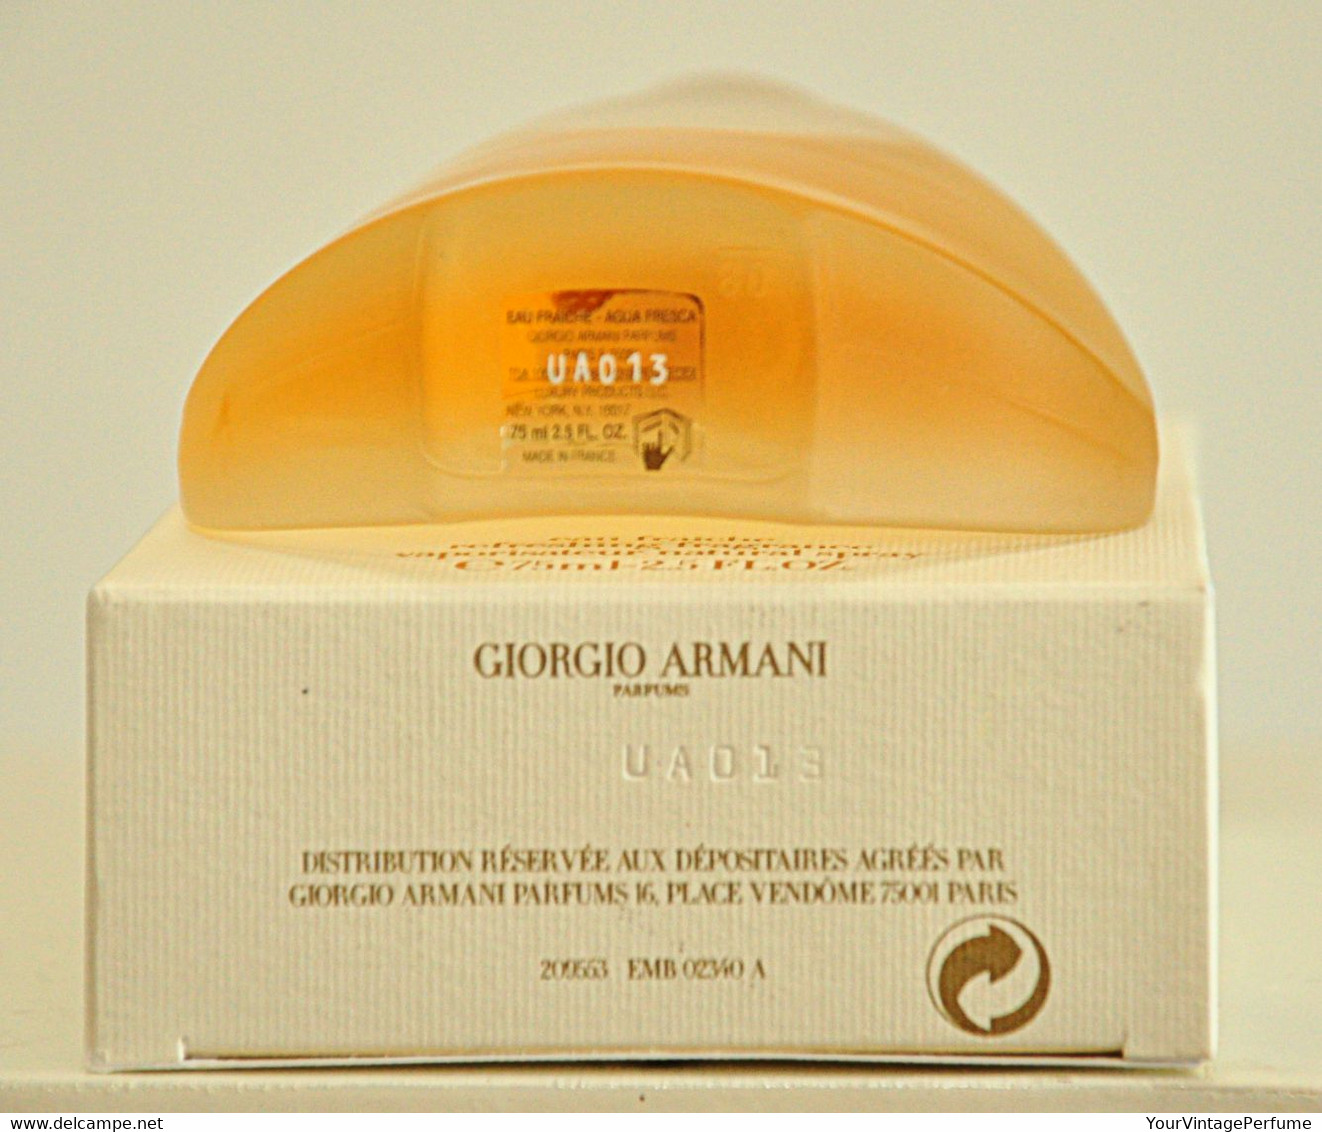 Giorgio Armani Sensi White Notes Eau Fraiche 75ml 2.5 Fl. Oz. Perfume Woman Rare Vintage 2004 - Femme